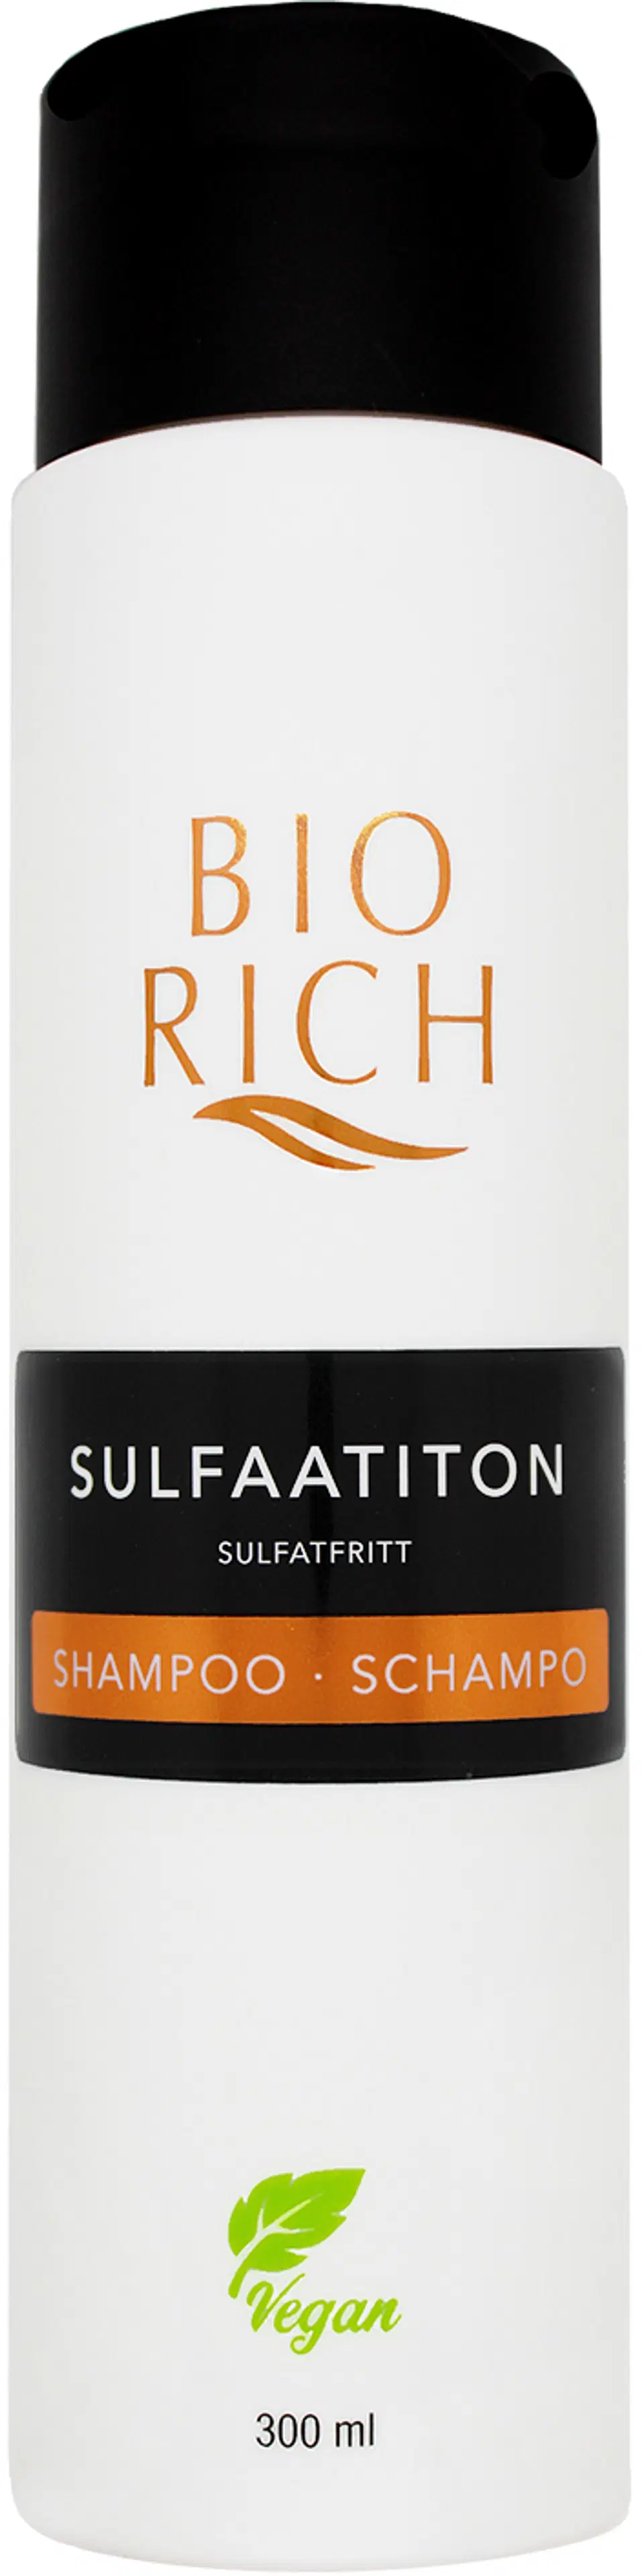 Bio Rich Sulfaatiton shampoo 300 ml